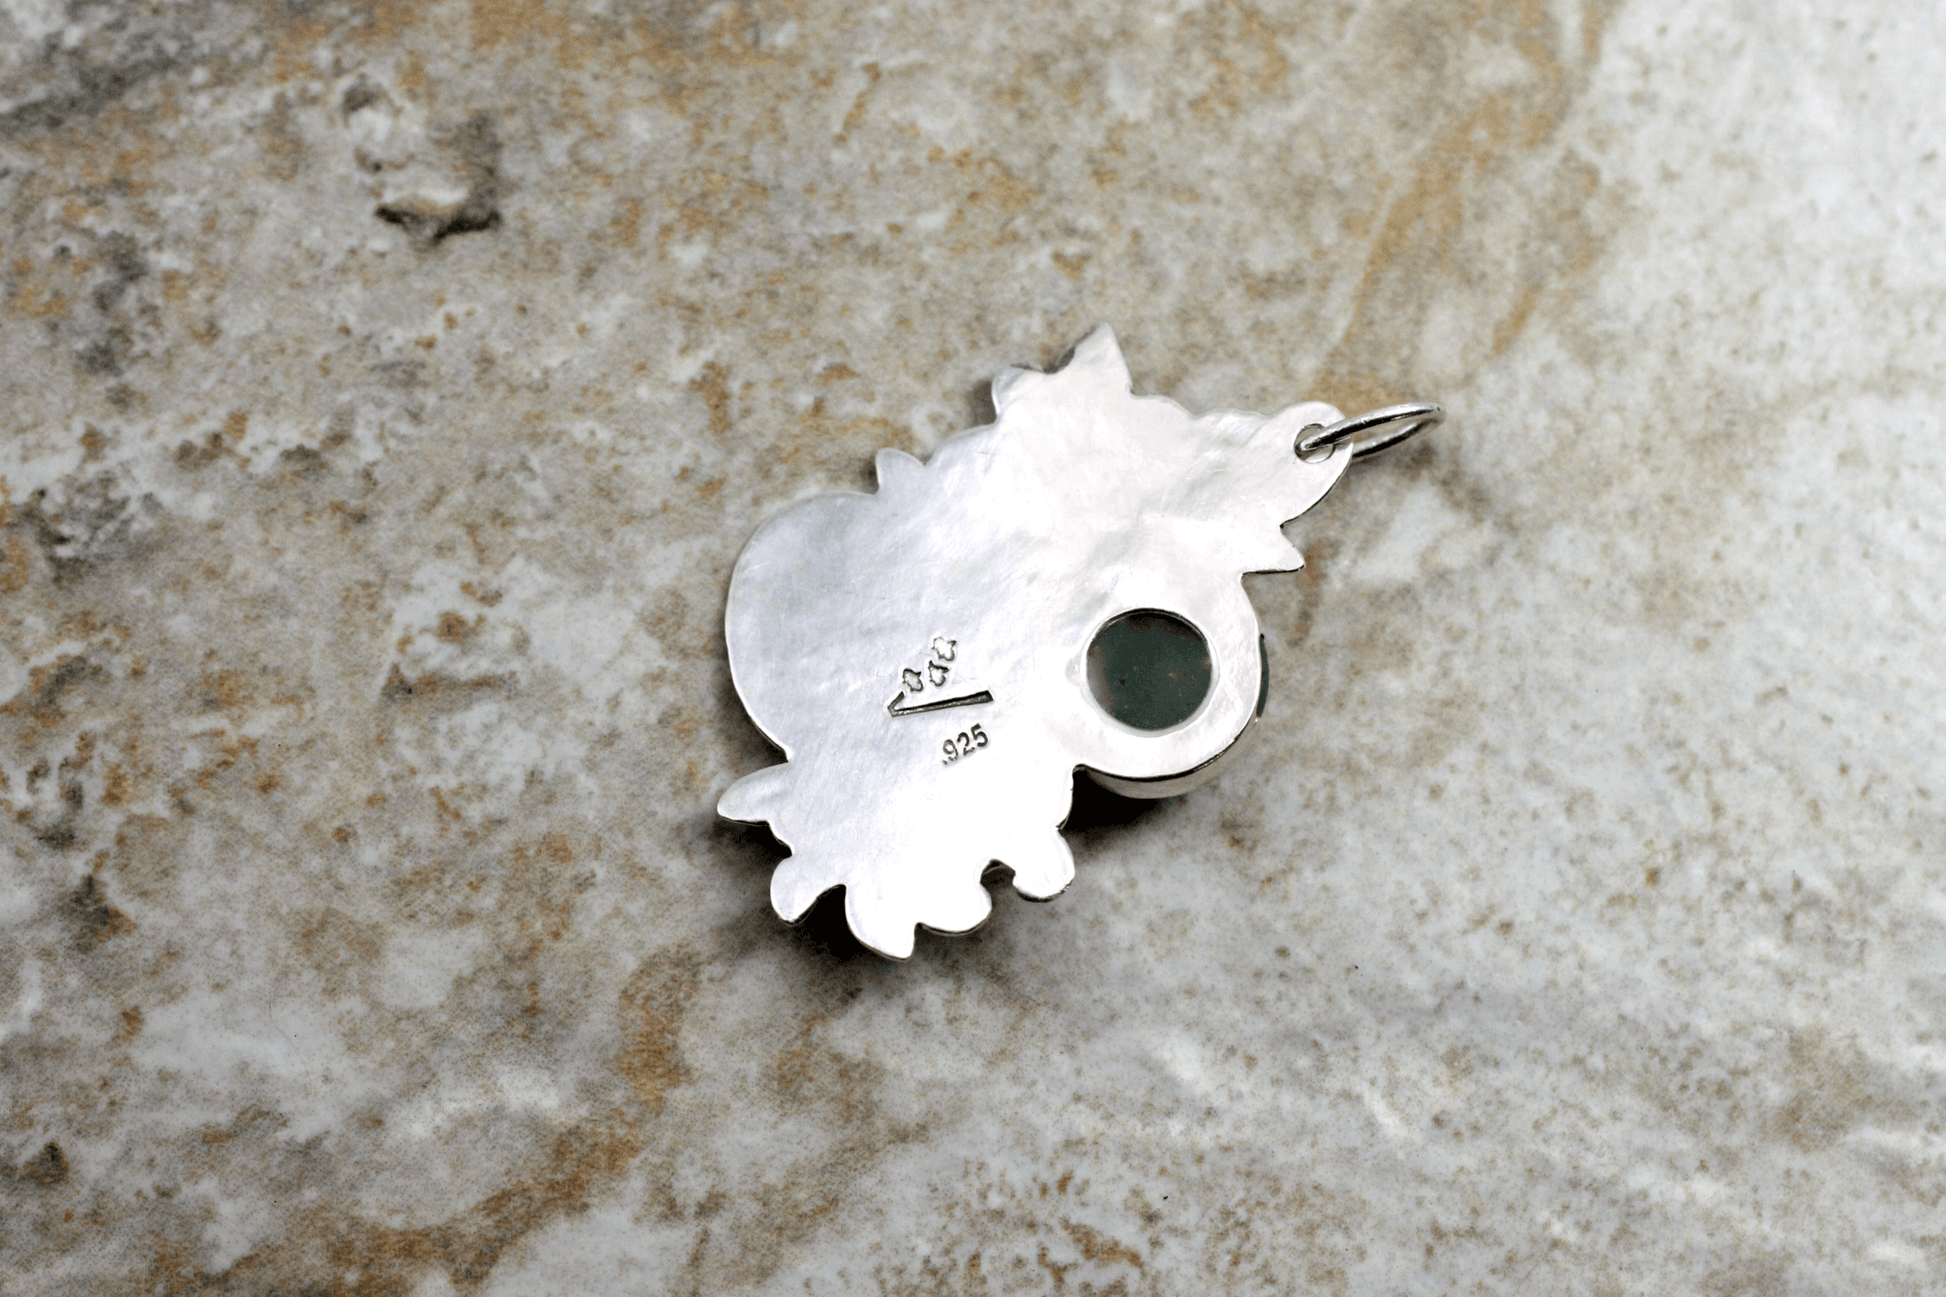 Sterling Silver, Green Aventurine Paisley Flower Pendant ~ Handcrafted Jewelry ~ VANDA inspired